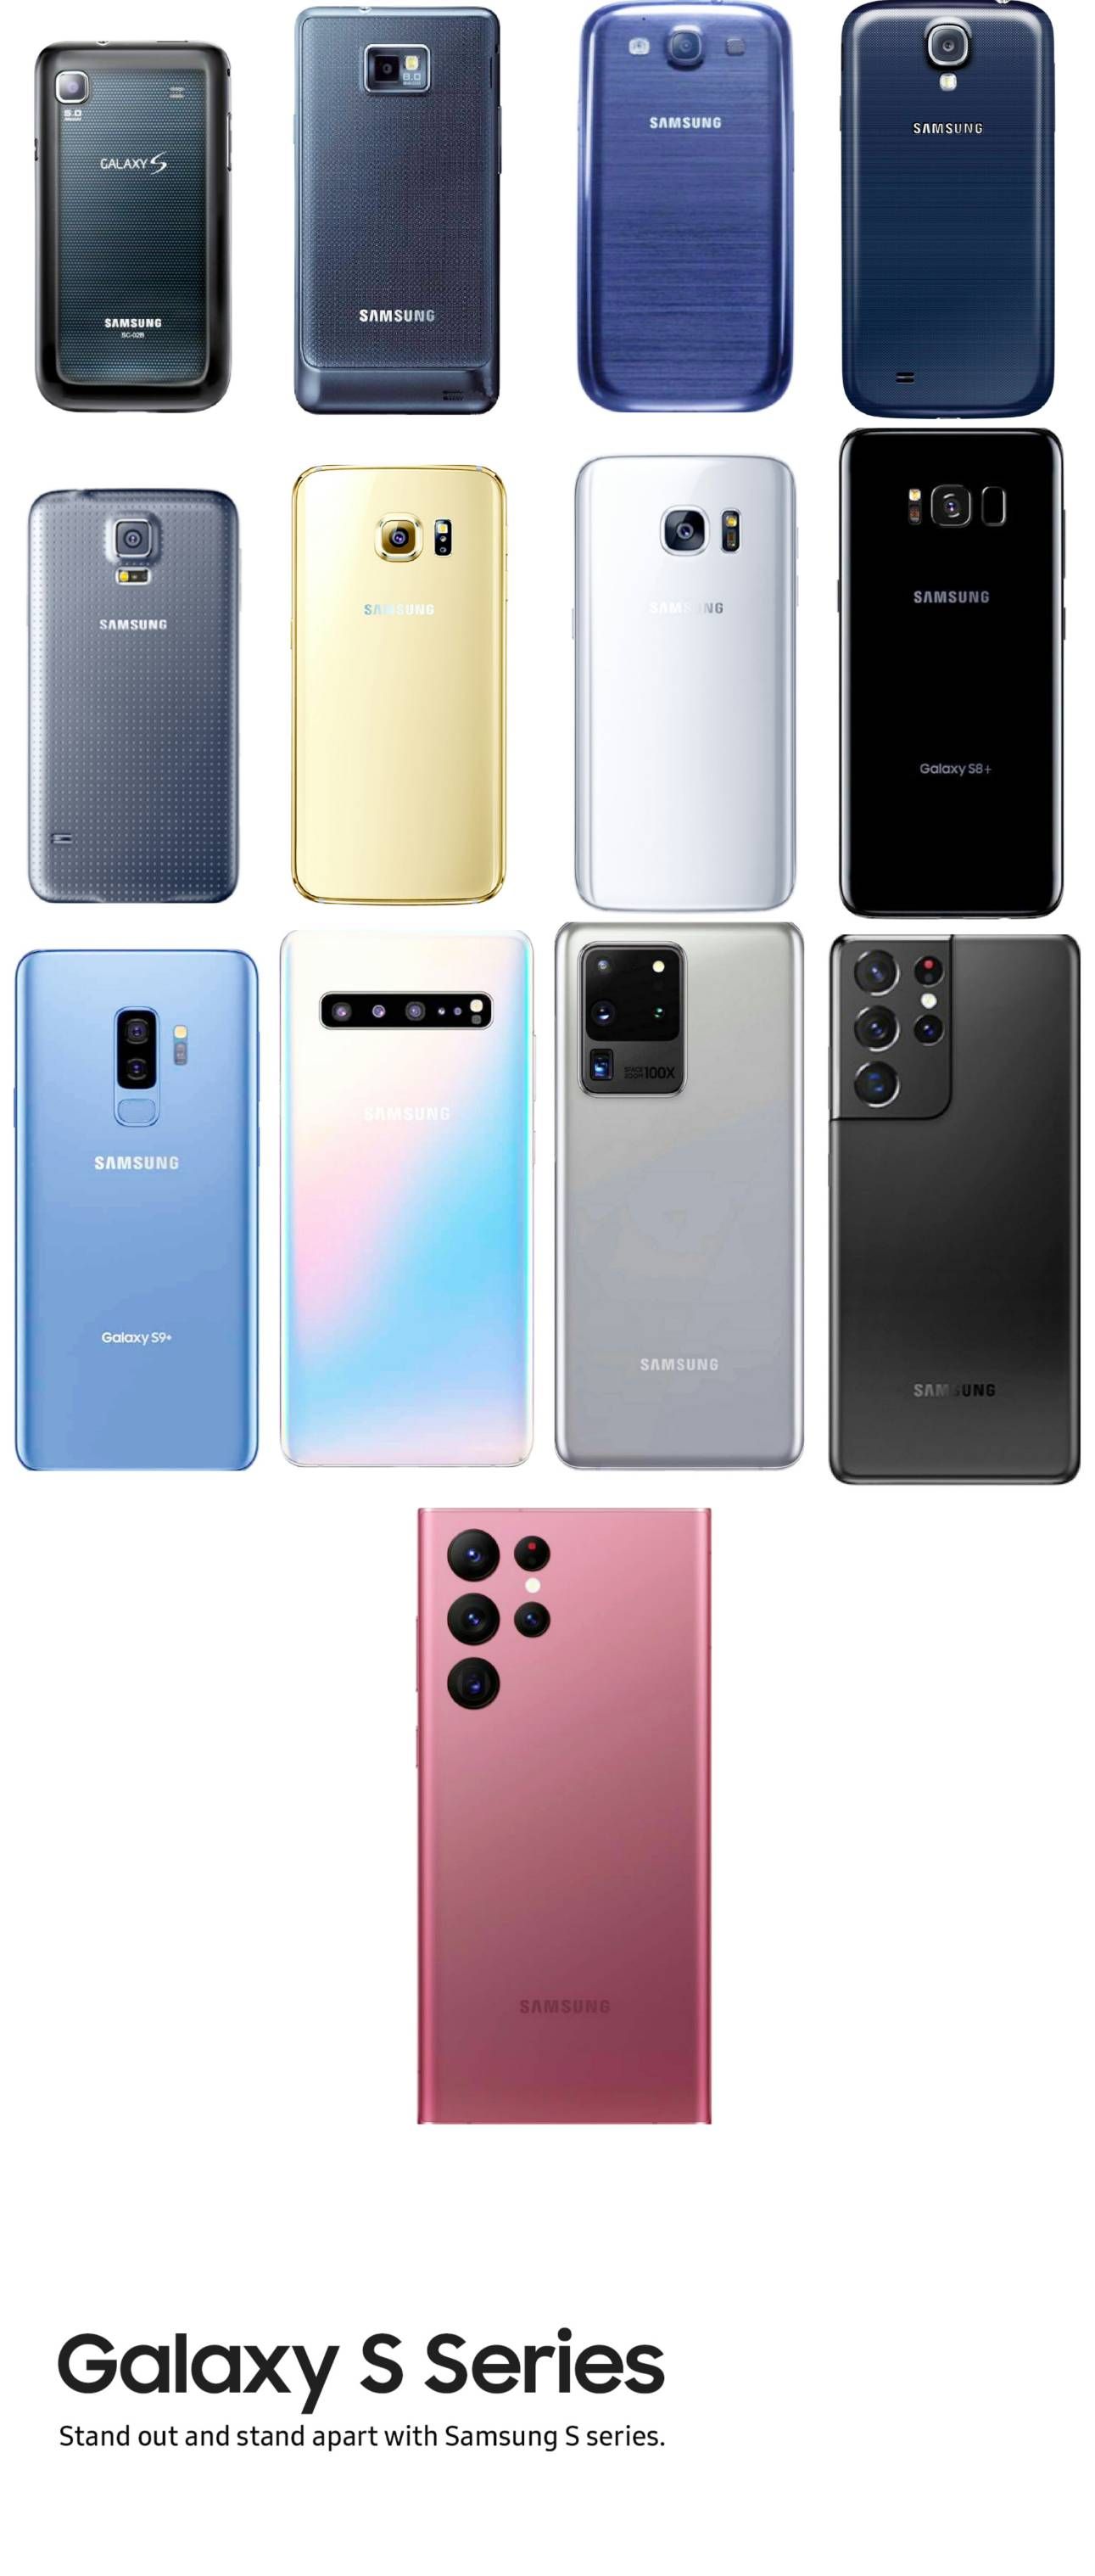 Evolution Of The Samsung Galaxy S Series - Samsung Members